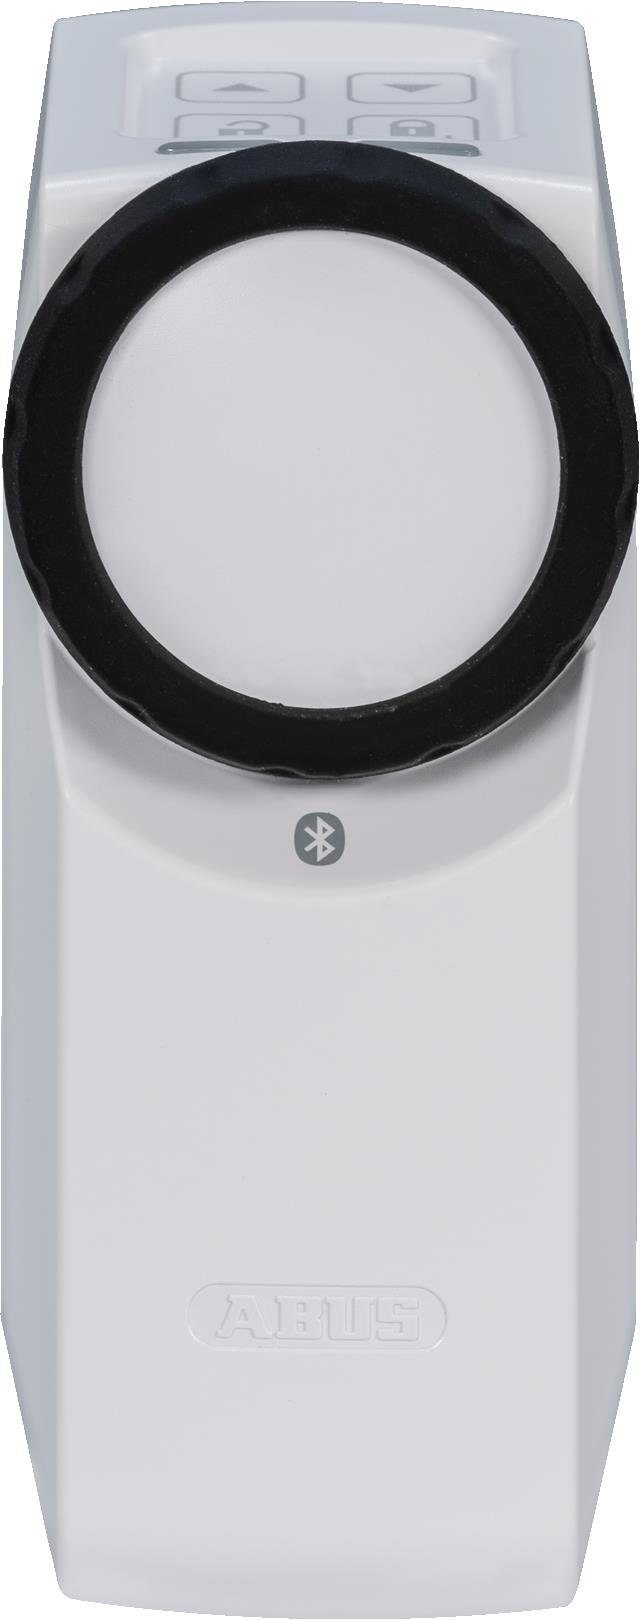 Türschloss Pro Bluetooth weiß Elektronisches CFA3100 ABUS HomeTec Türschlossantrieb Abus W